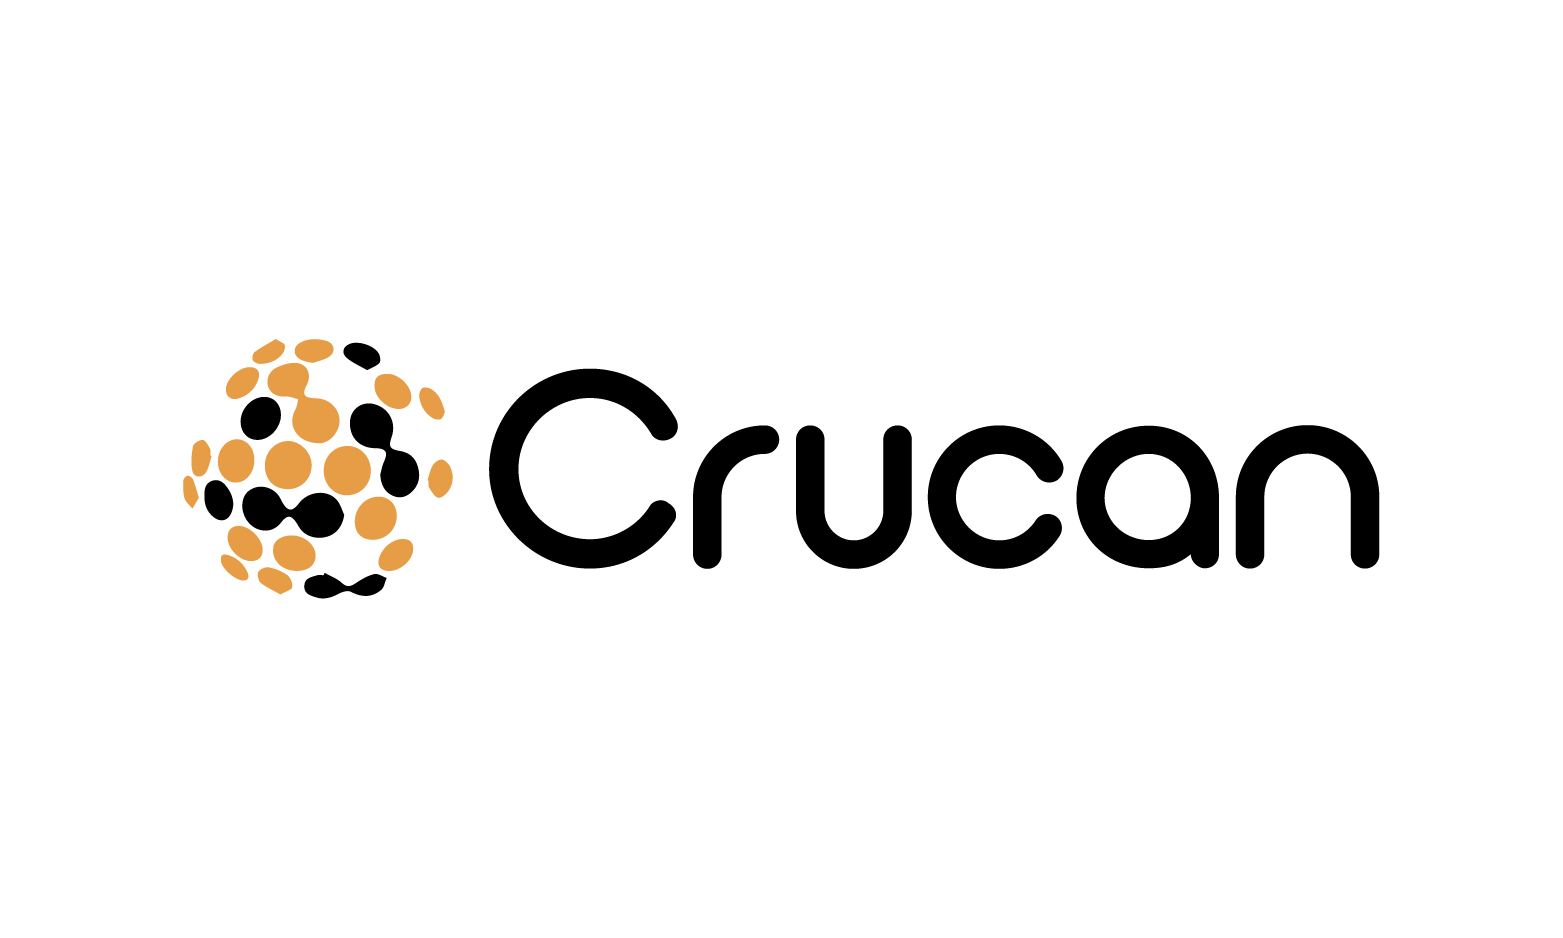 Crucan.com - Creative brandable domain for sale